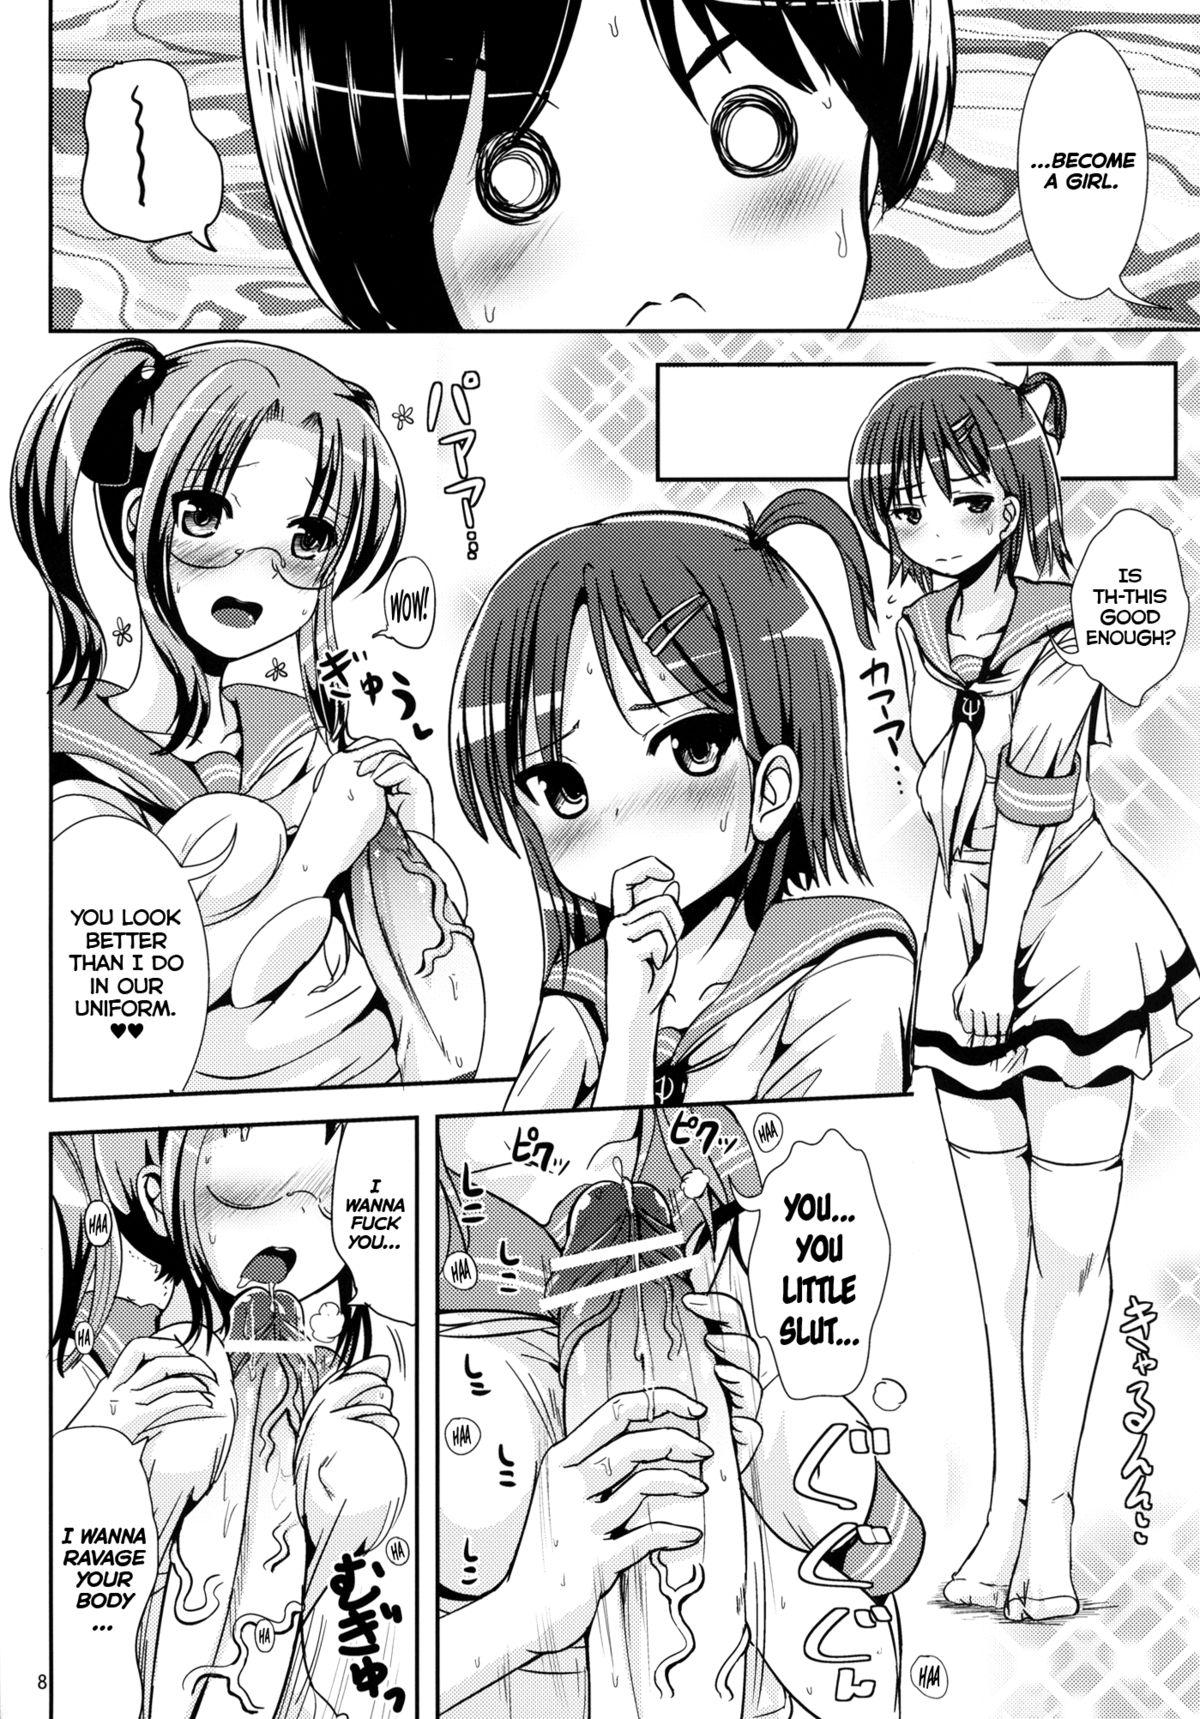 Hot Mom Rouka-kei Hitaishou Girl | The Abnormal Wallflower Verified Profile - Page 8